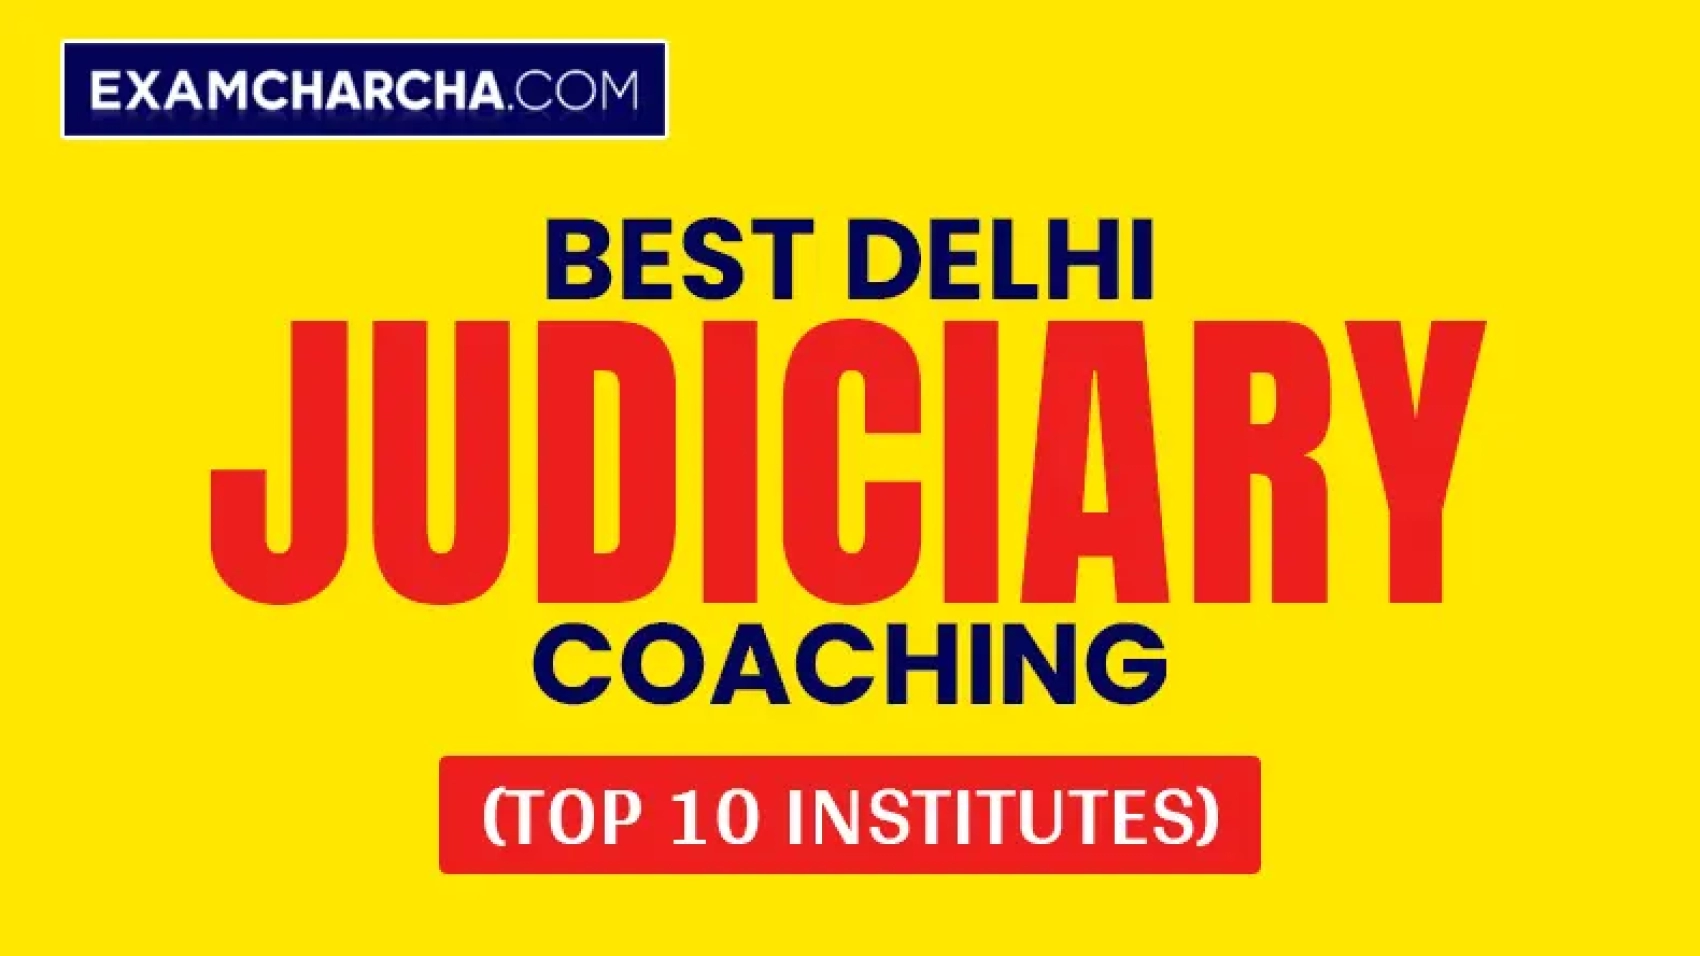 Best Delhi Judiciary Coaching